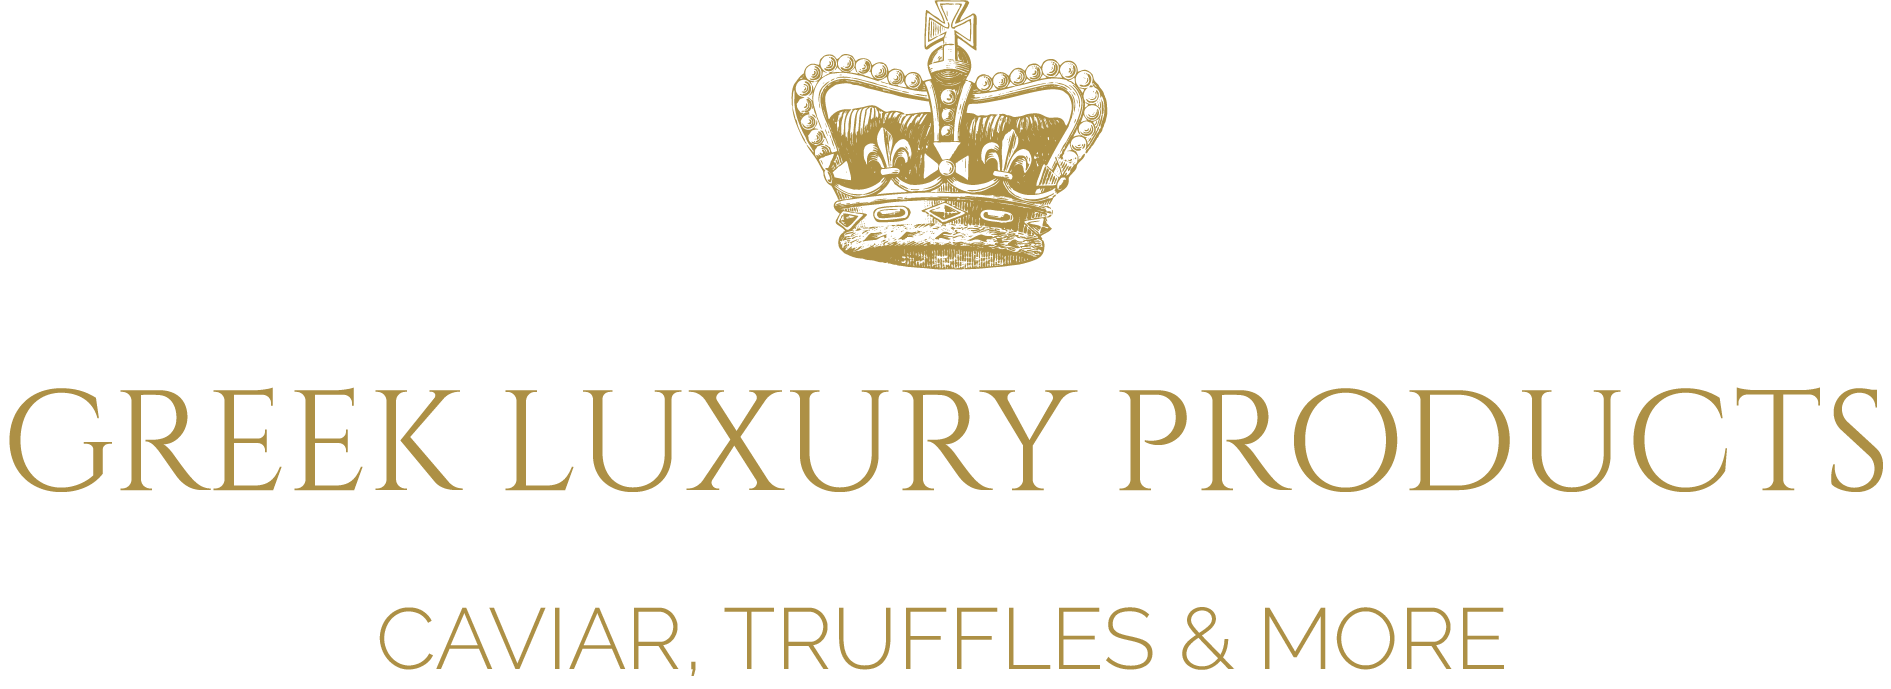 Greek luxury products logo